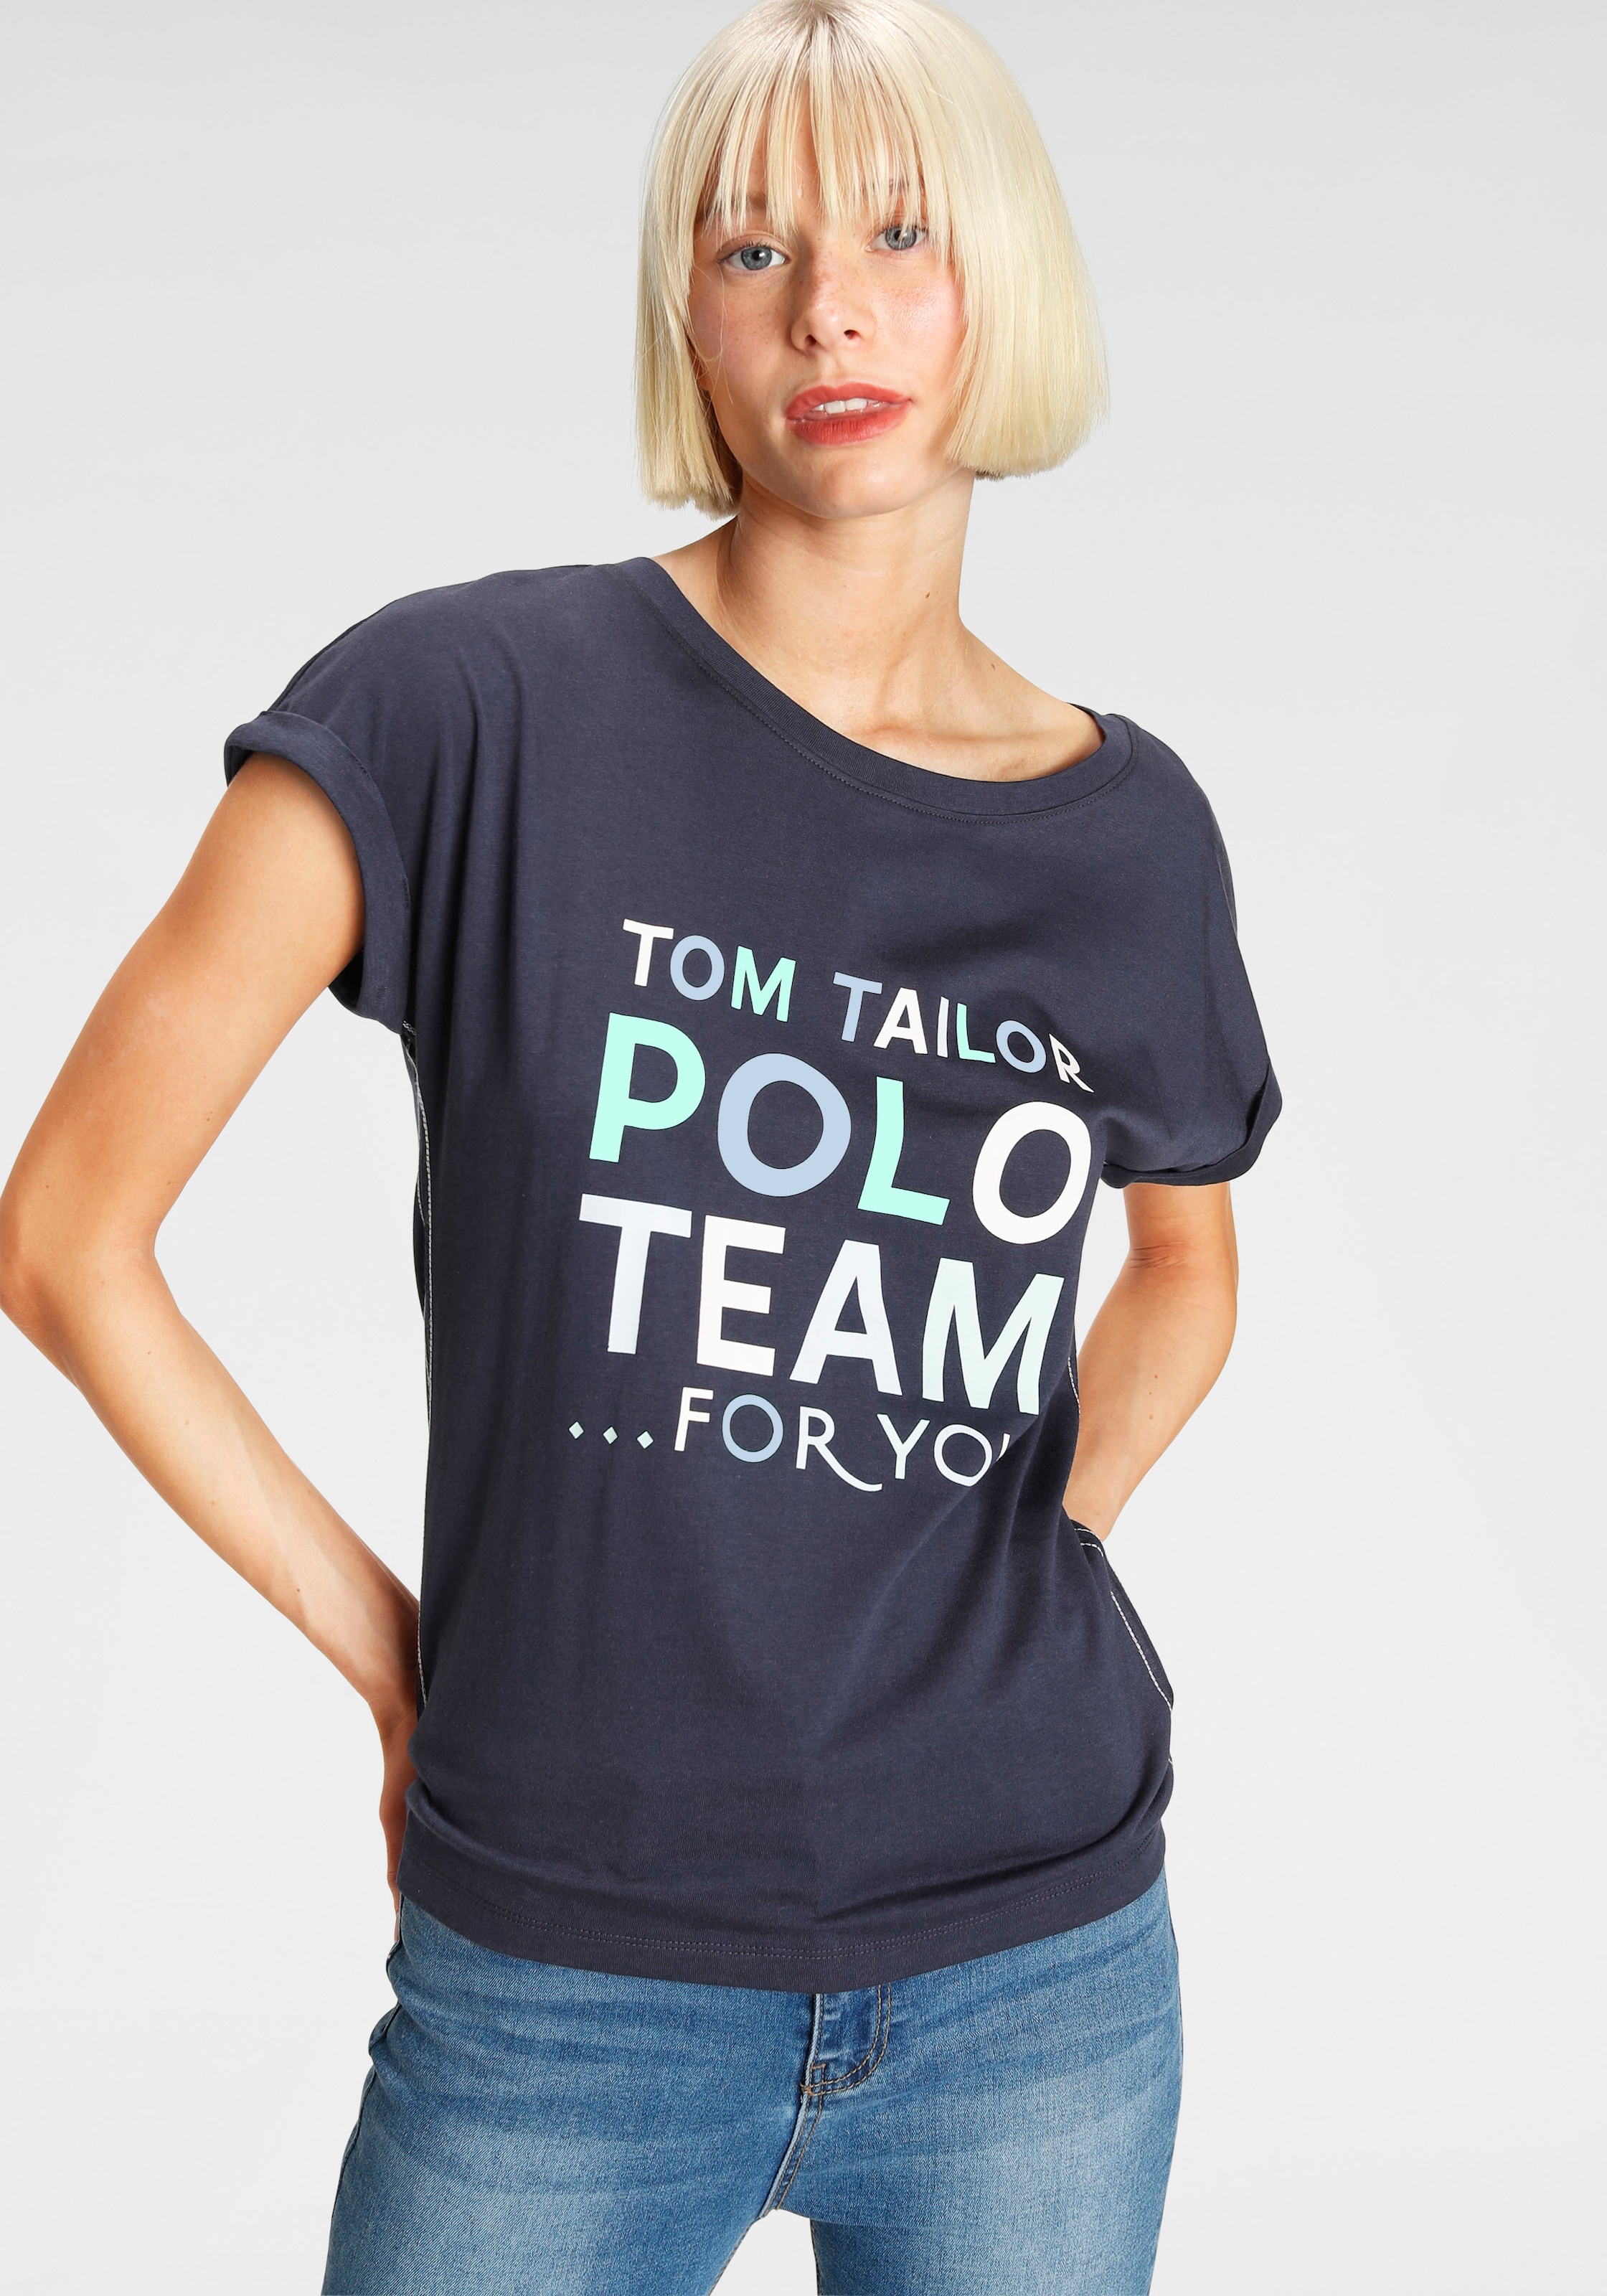 Tom Tailor Polo Team online ▻ kaufen